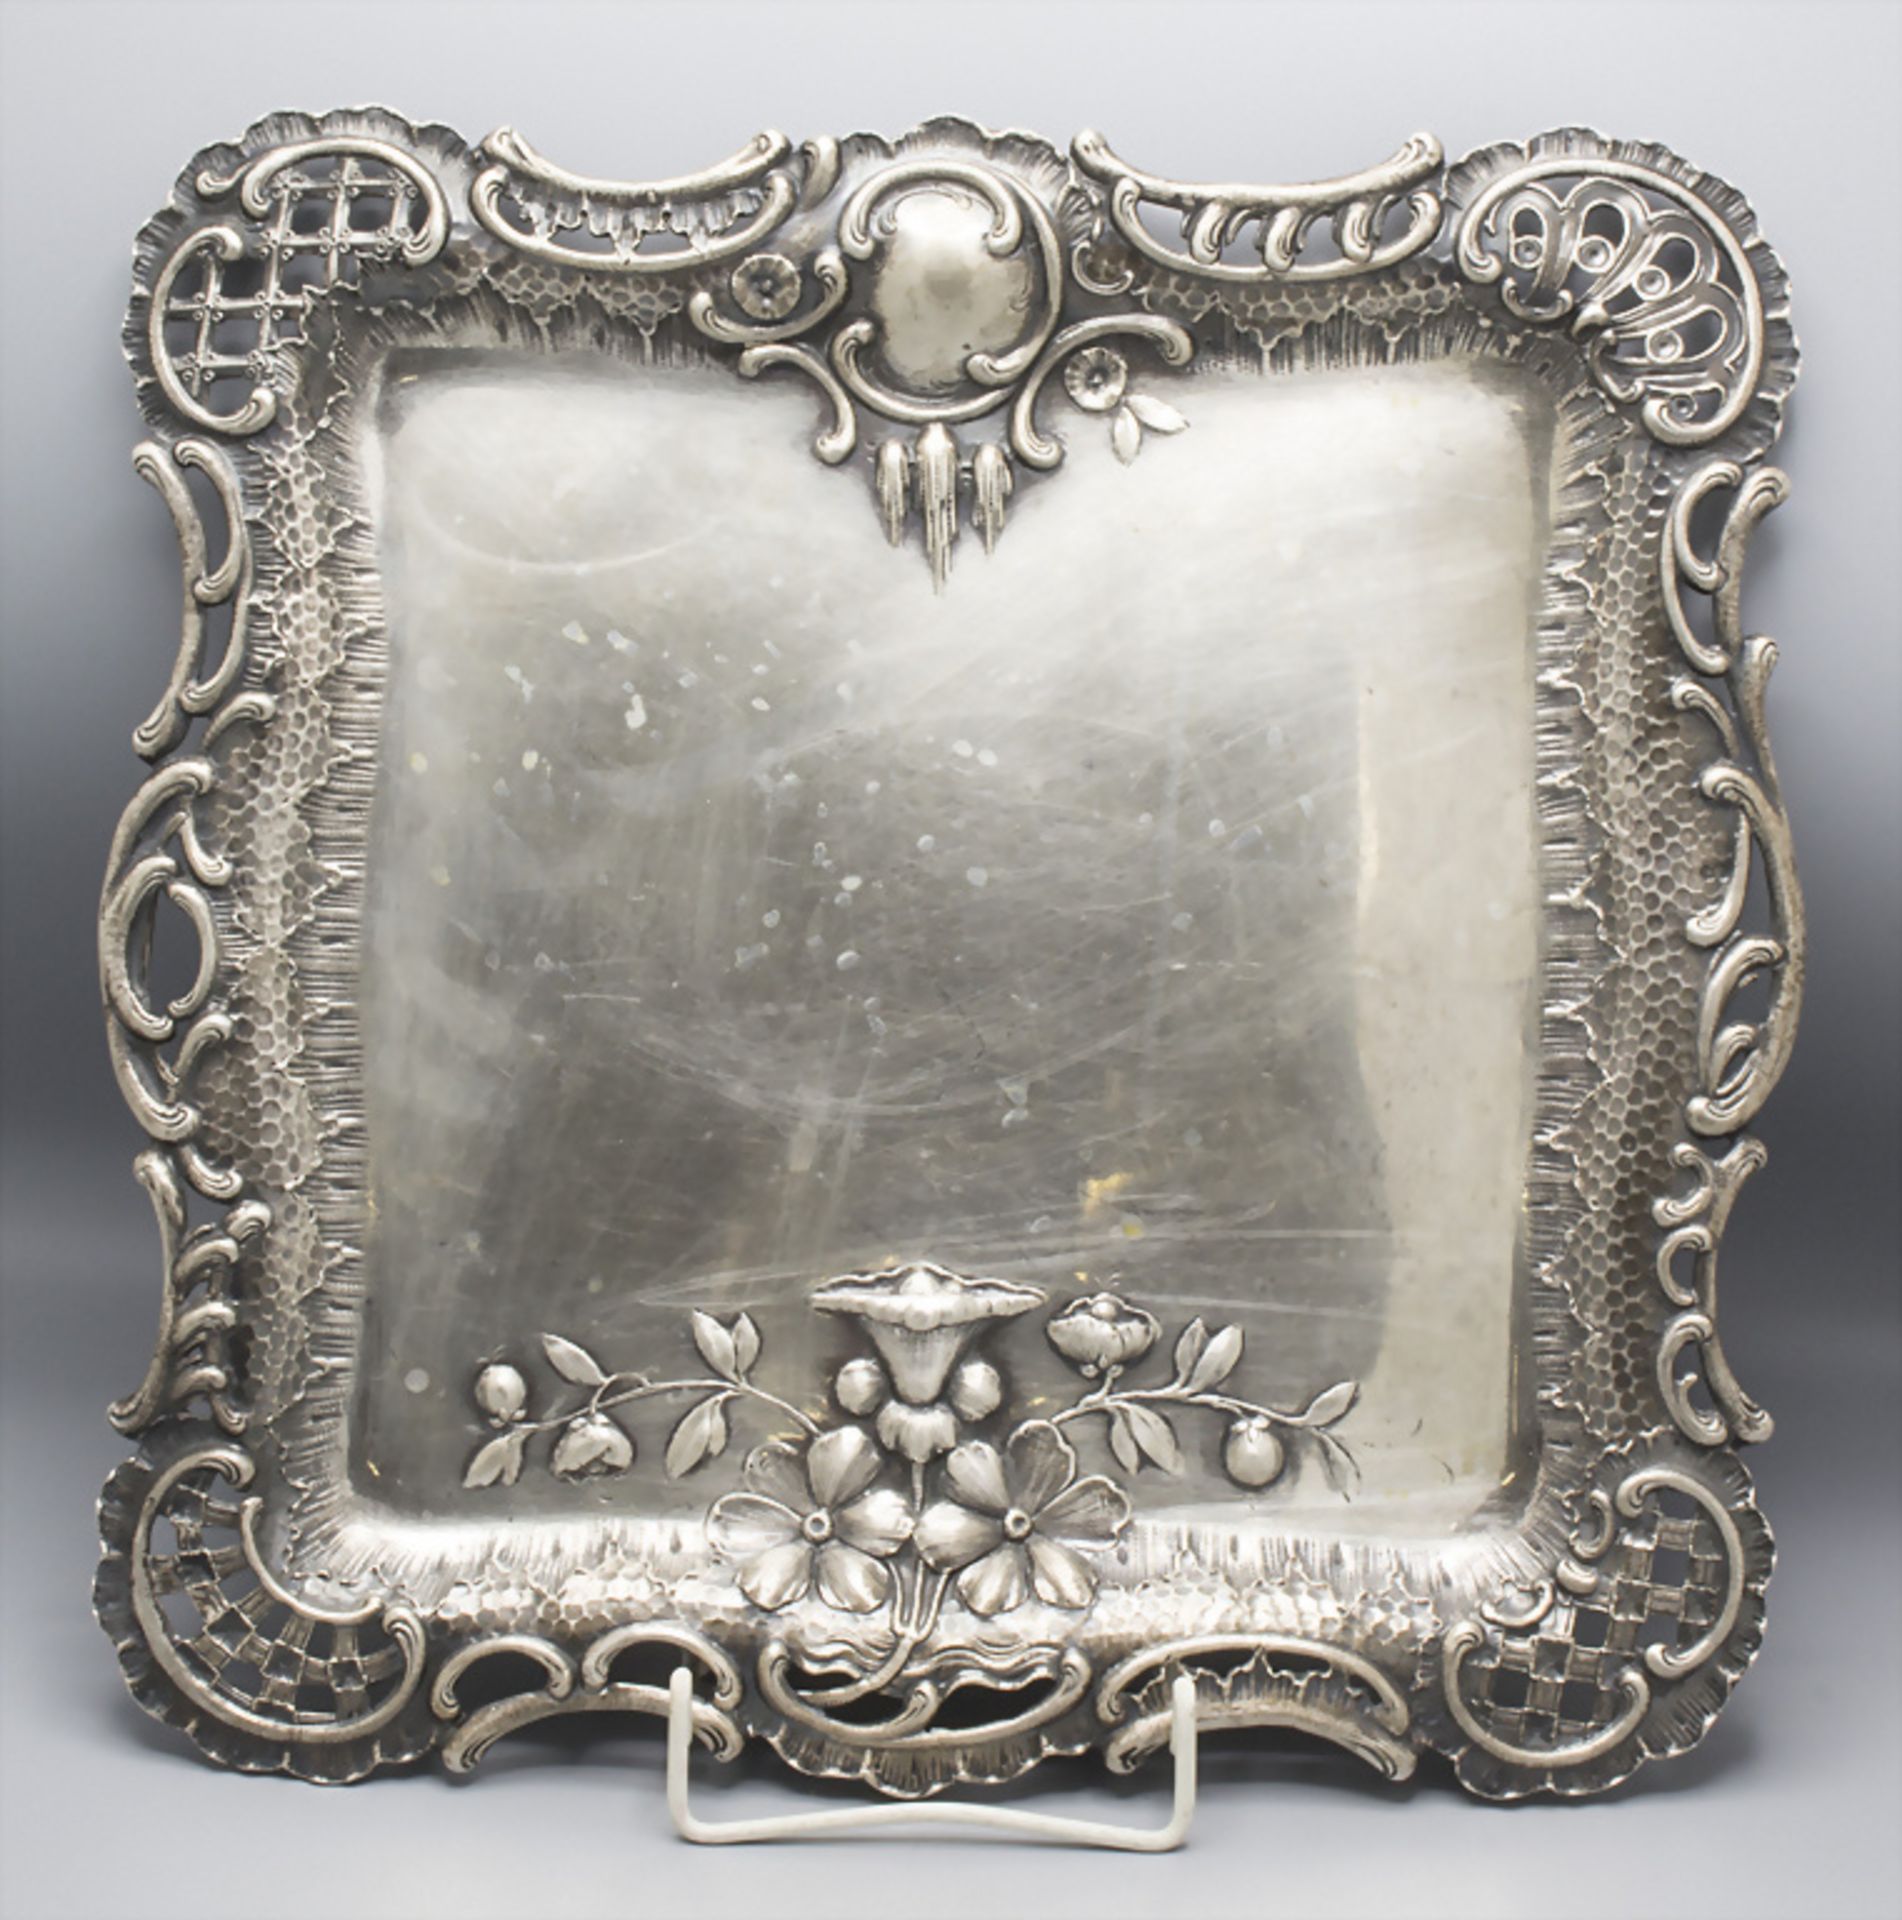 Tablett / Plateau en argent massif / A silver tray, E. Fleischmann, Wien, nach 1868